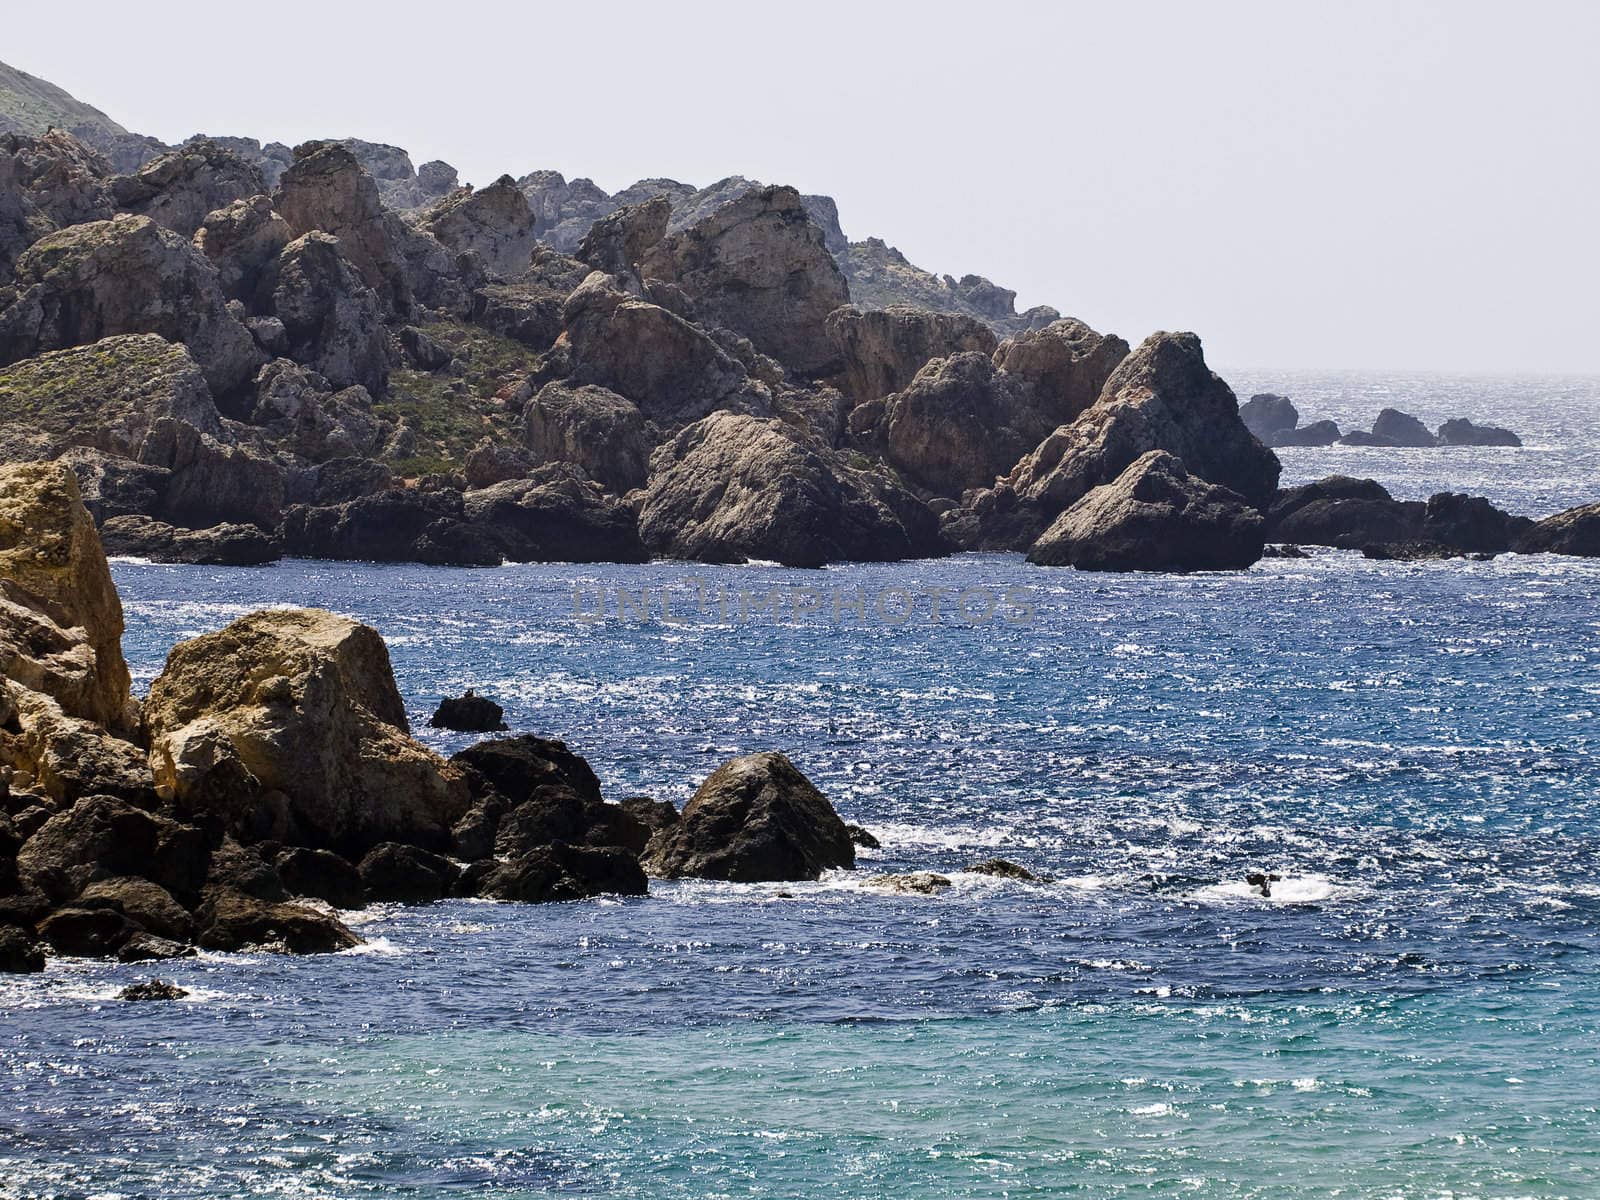 Rocks and boulders along the Mediterranean coastline in Malta